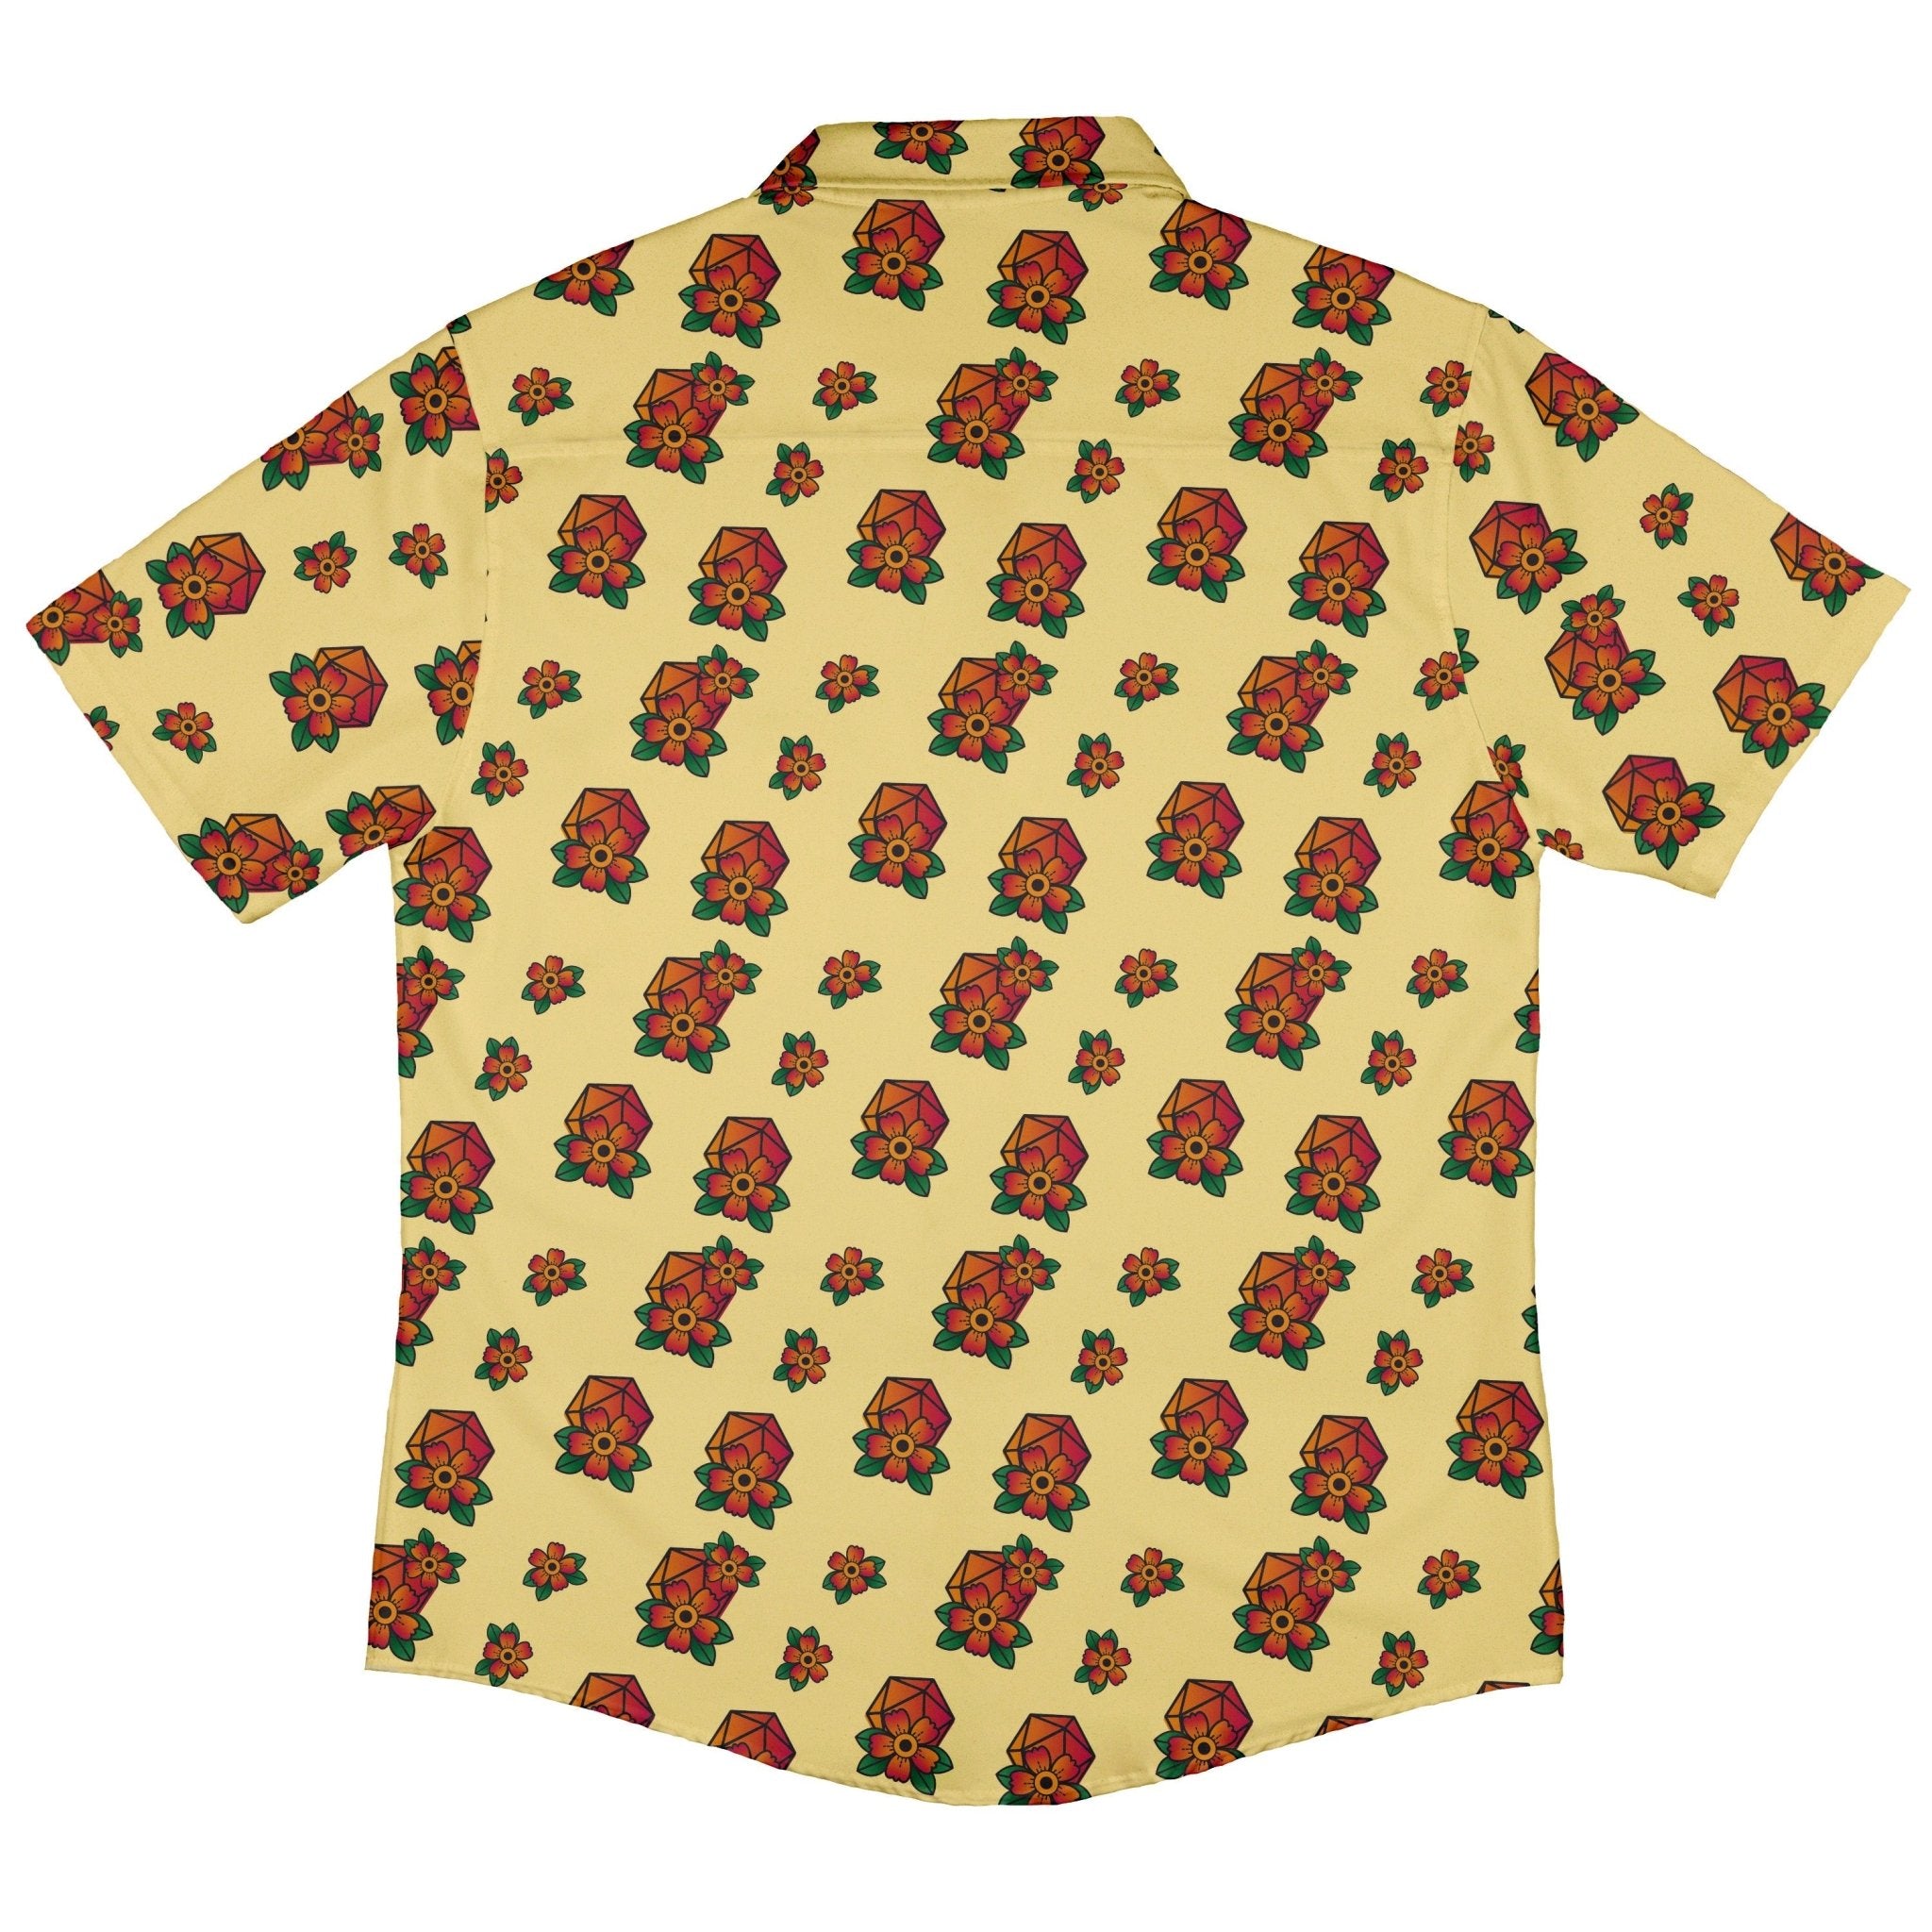 D20 Floral Hawaiian Yellow Button Up Shirt - adult sizing - Design by Heather Davenport - dnd & rpg print